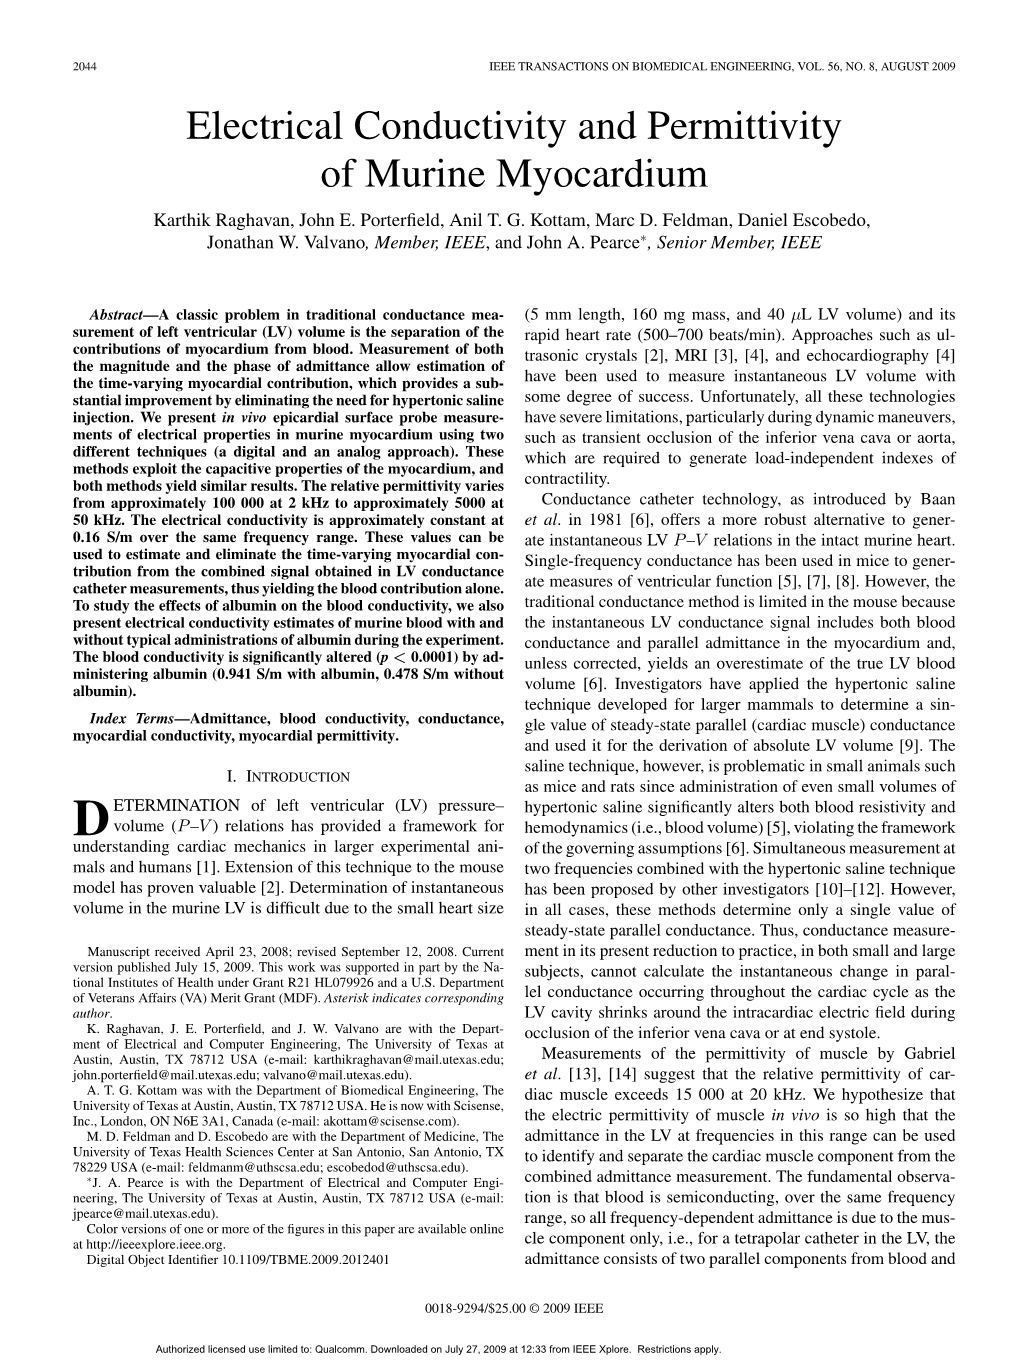 Electrical Conductivity and Permittivity of Murine Myocardium Karthik Raghavan, John E